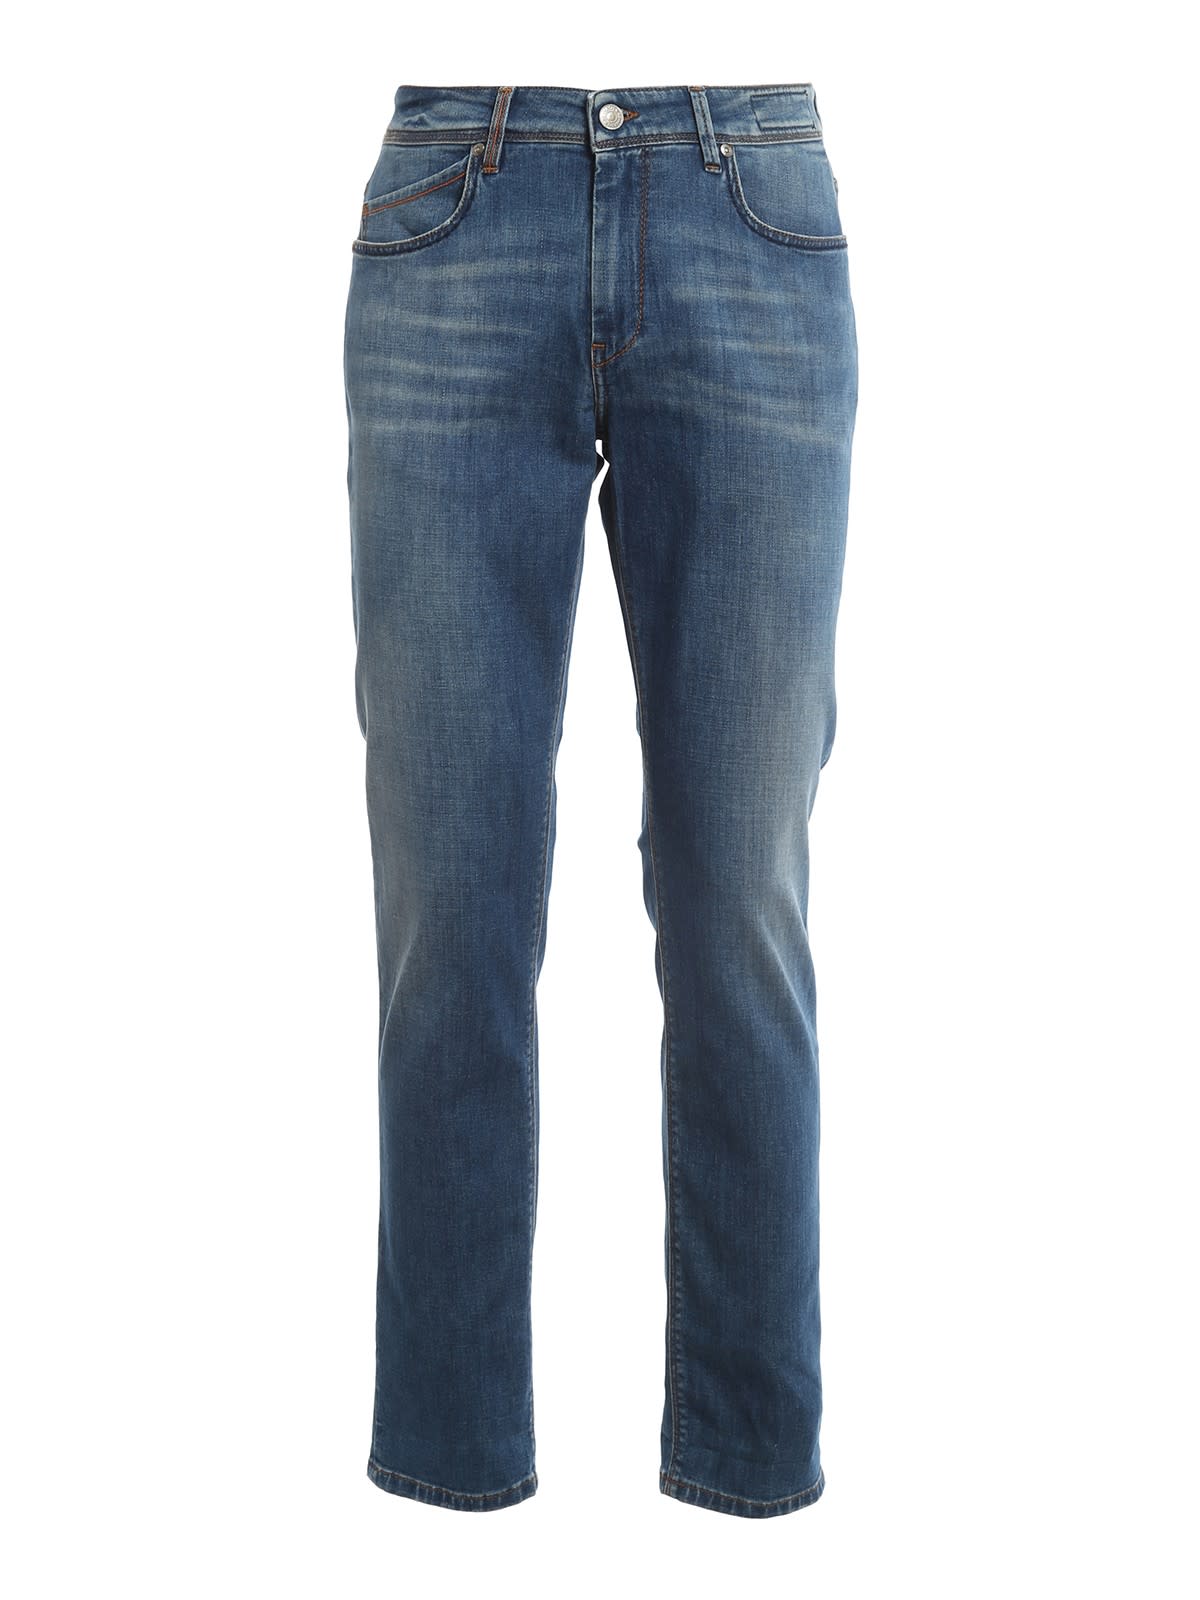 Re-HasH Jeans Rubens P01527009pblue